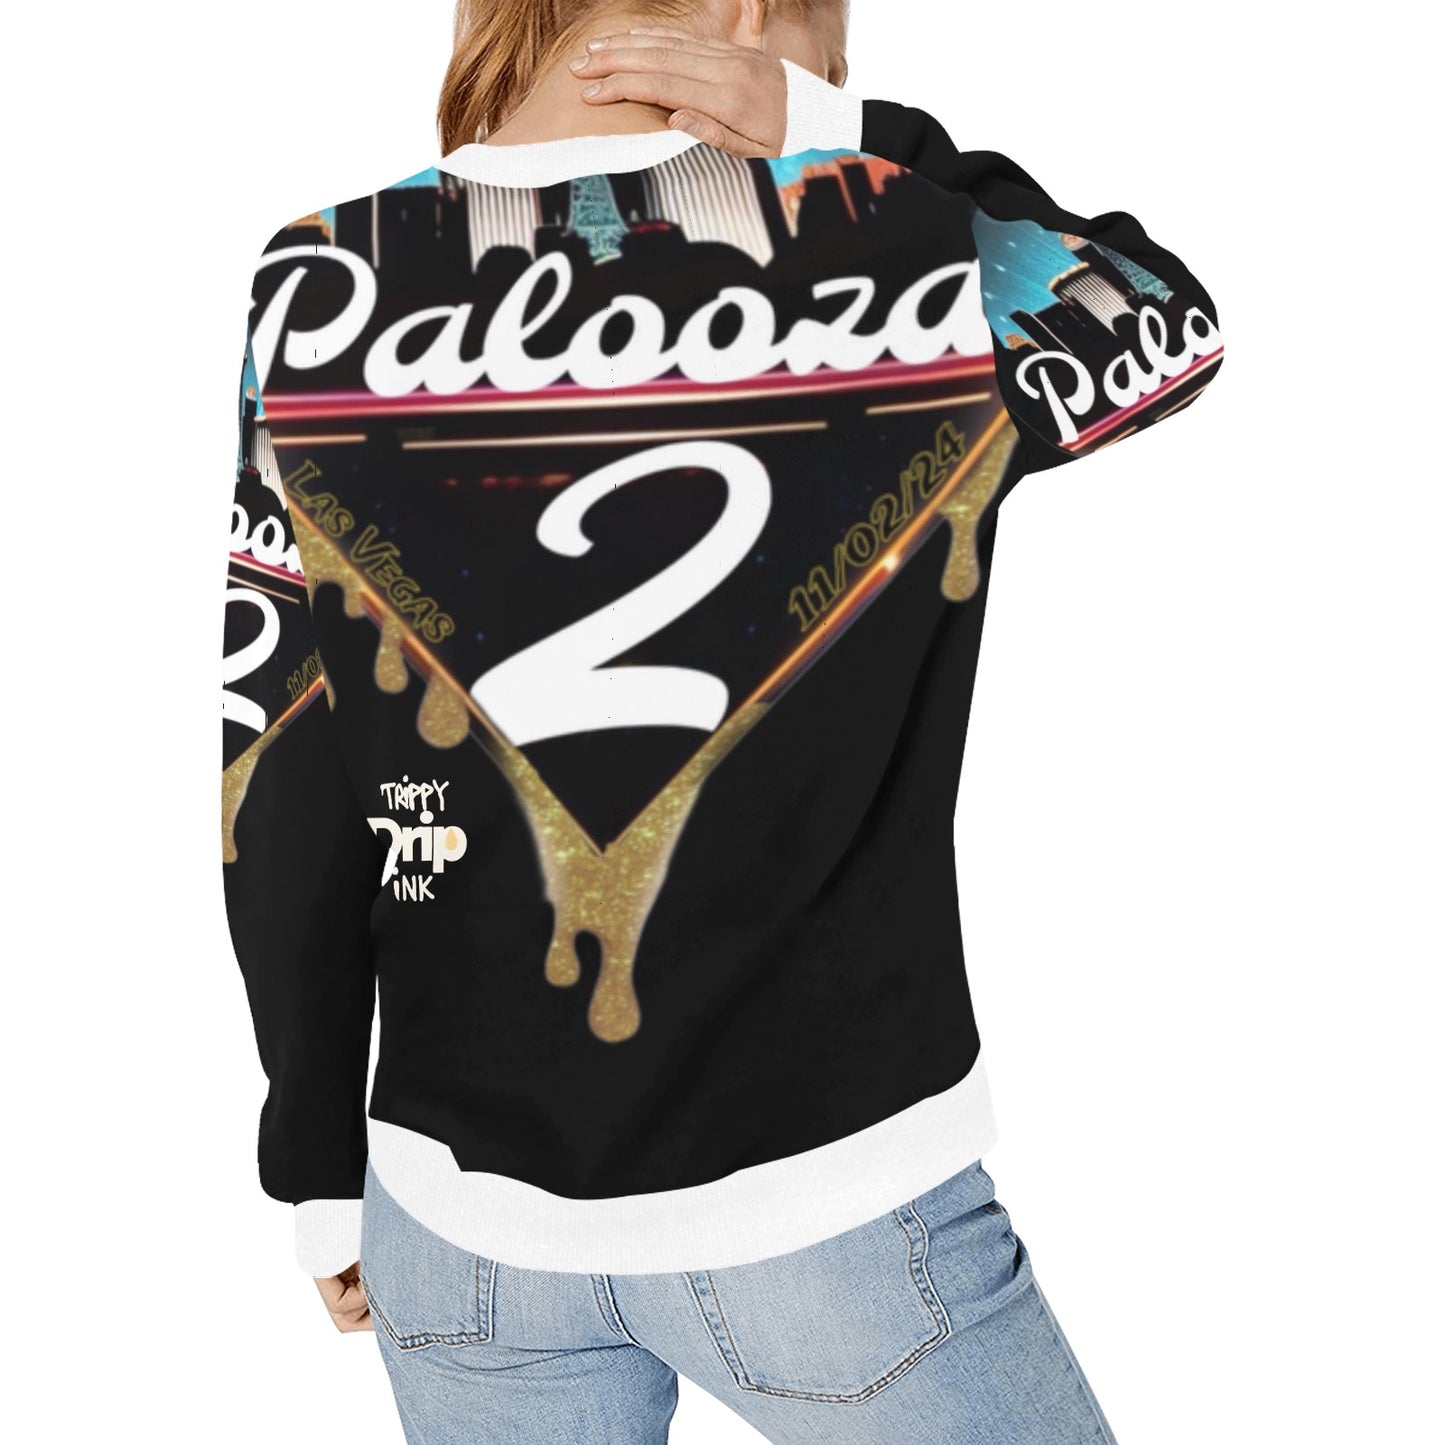 Official Palooza 2 Merch (Women’s Sweatshirt)